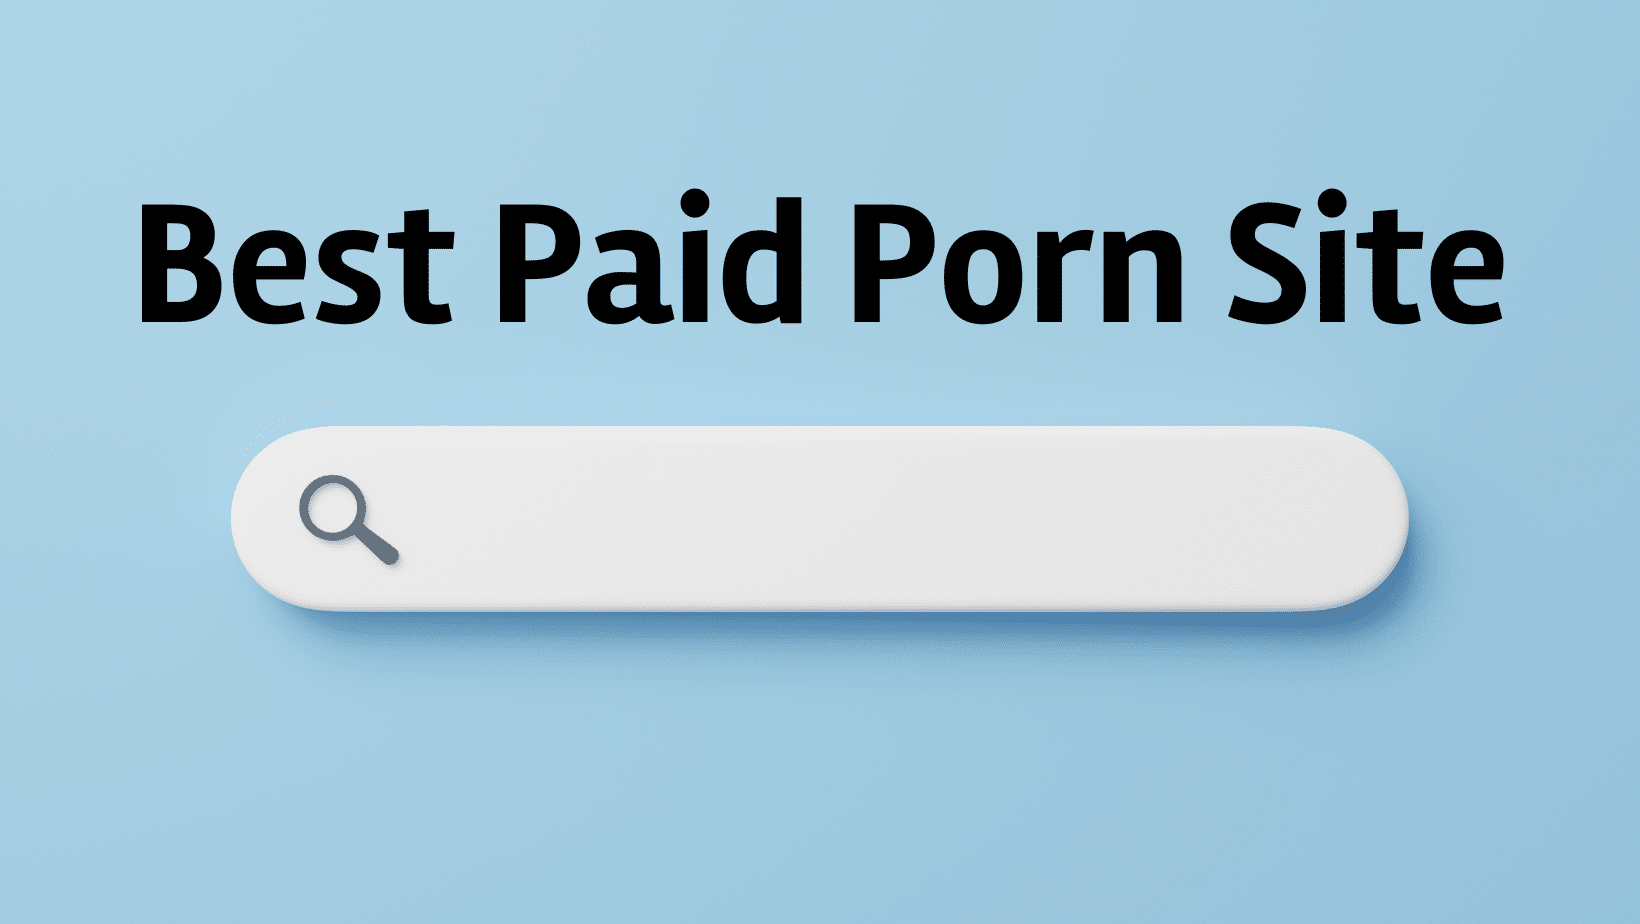 Best Paid Porn Sites – My Honest Opinion on Top 11 Legit Platforms